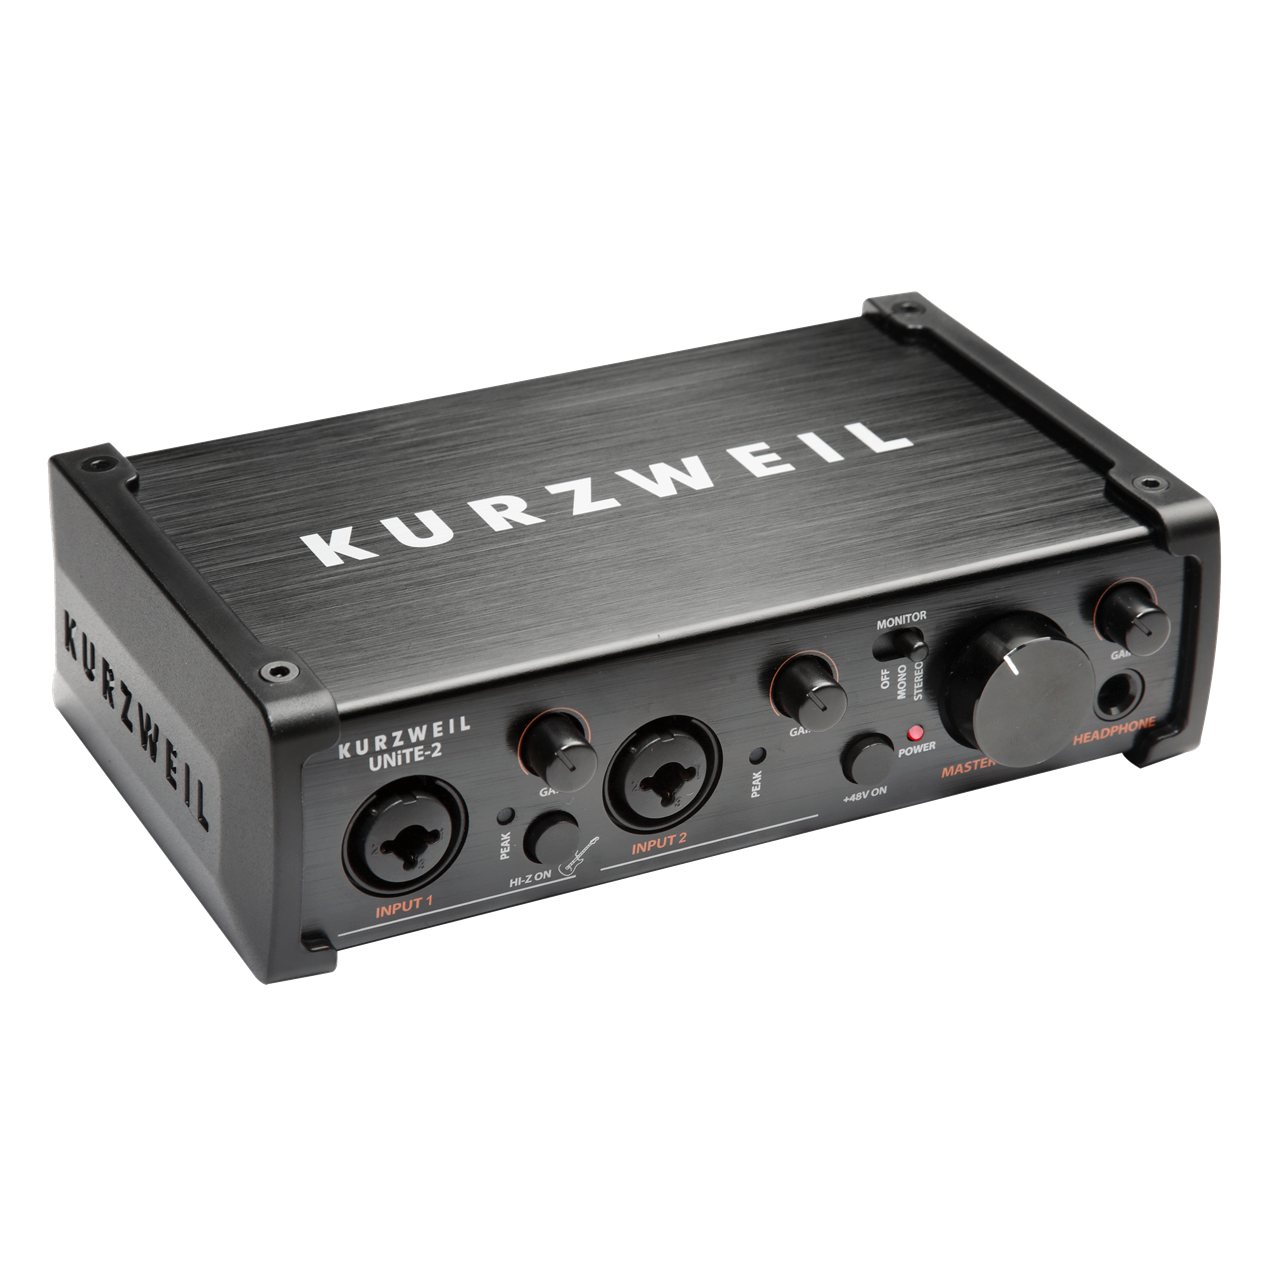 Kurzweil Unite-2 | USB Audio Interface